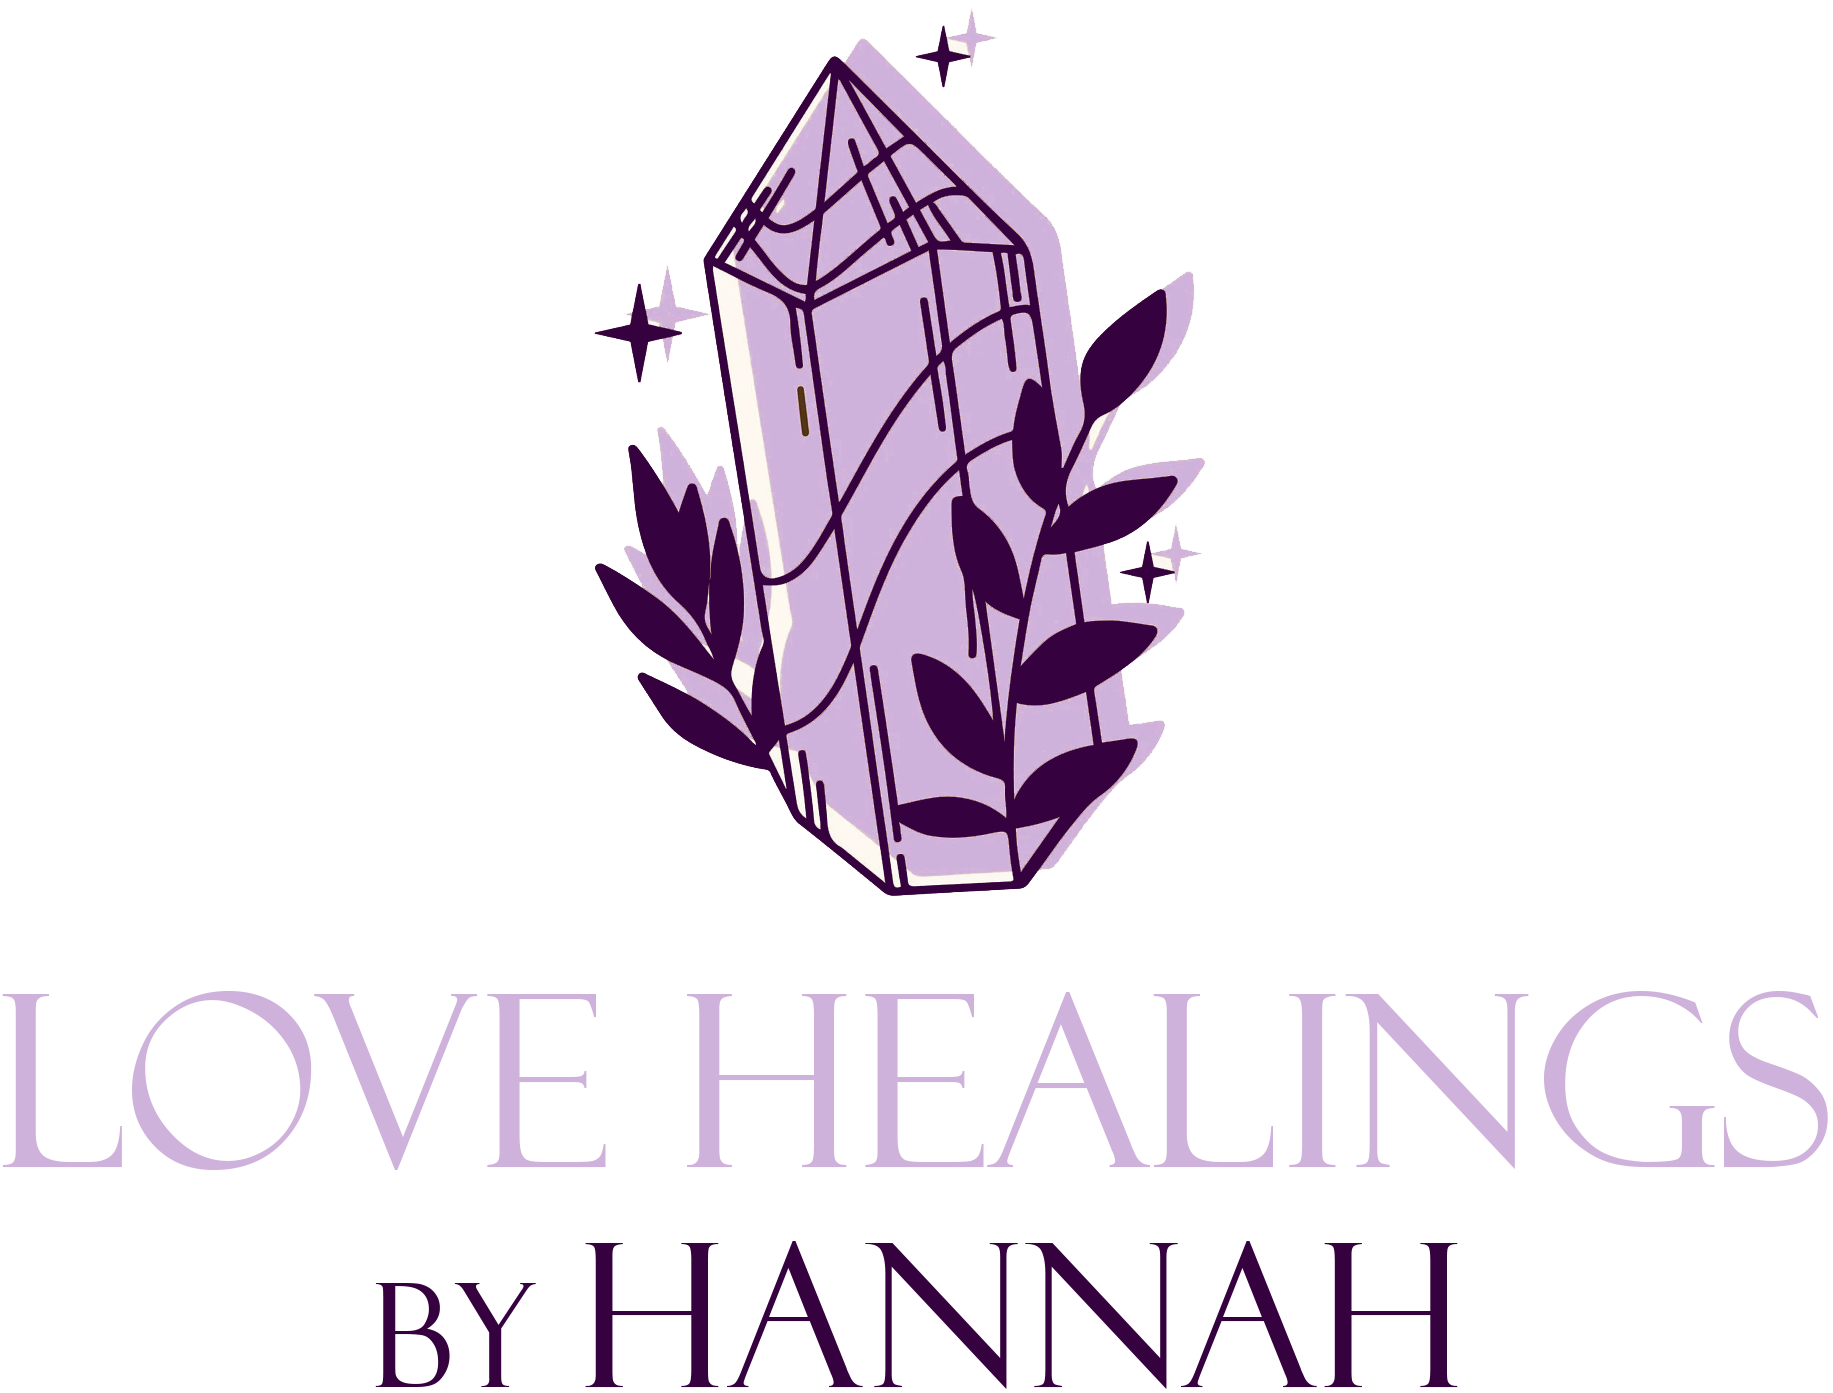 Love Healings by Hannah